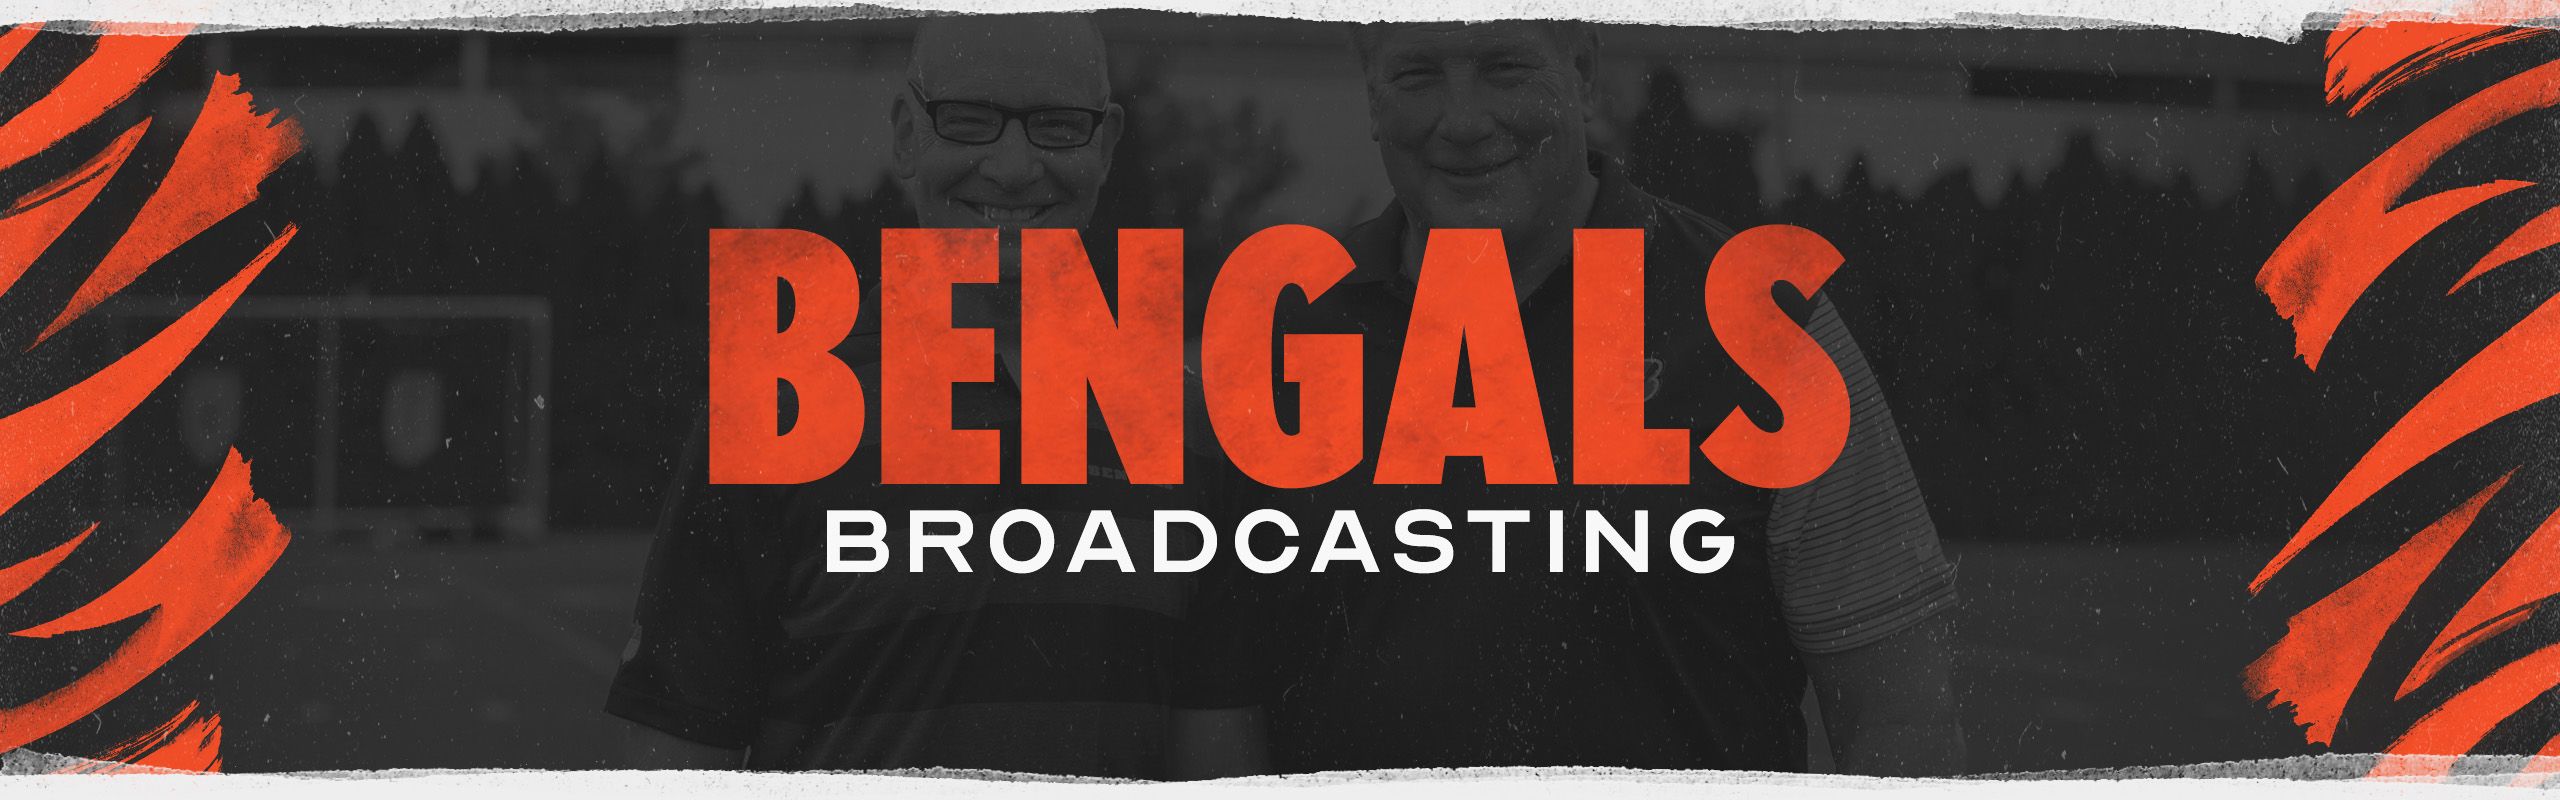 bengals game live radio